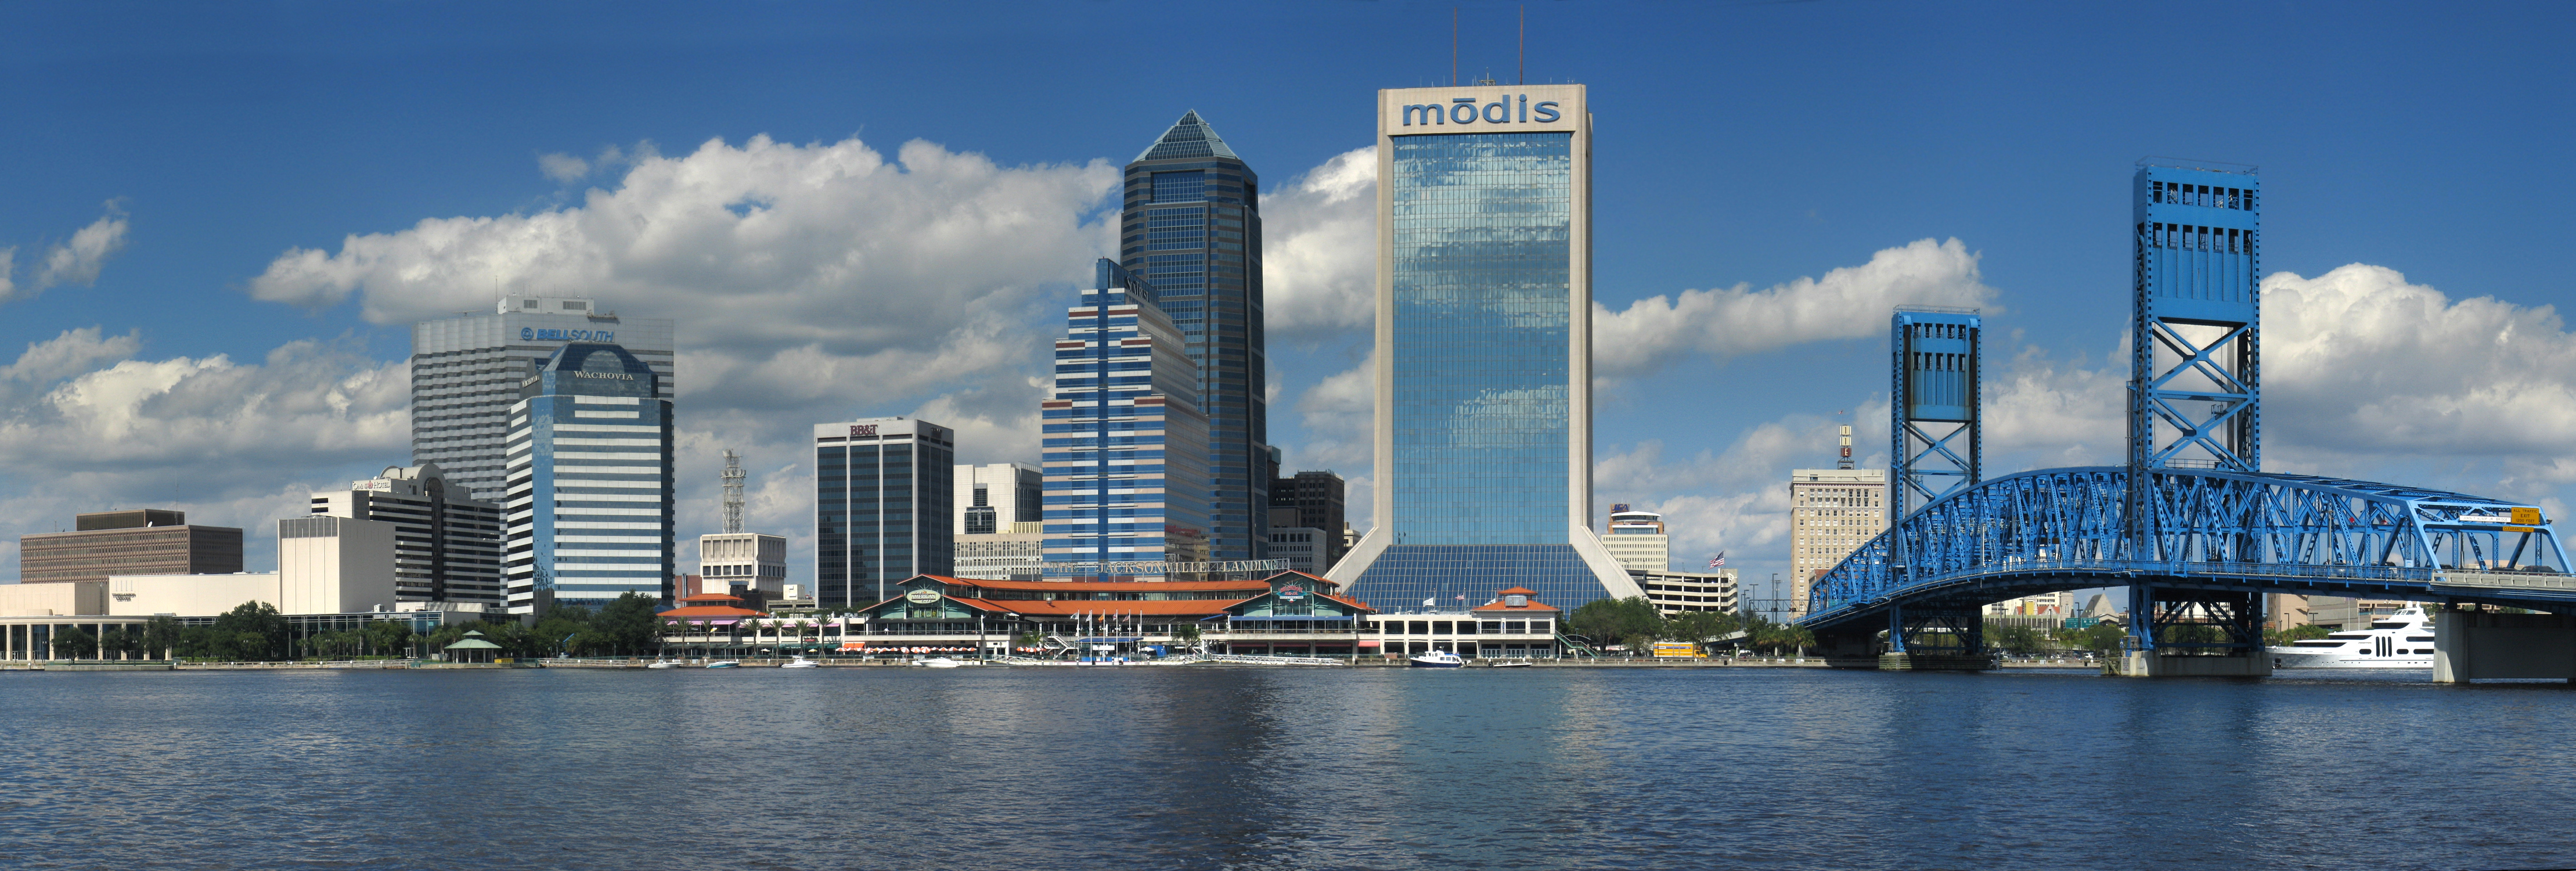 File:Jacksonville Skyline Panorama 2.jpg - Wikimedia Commons